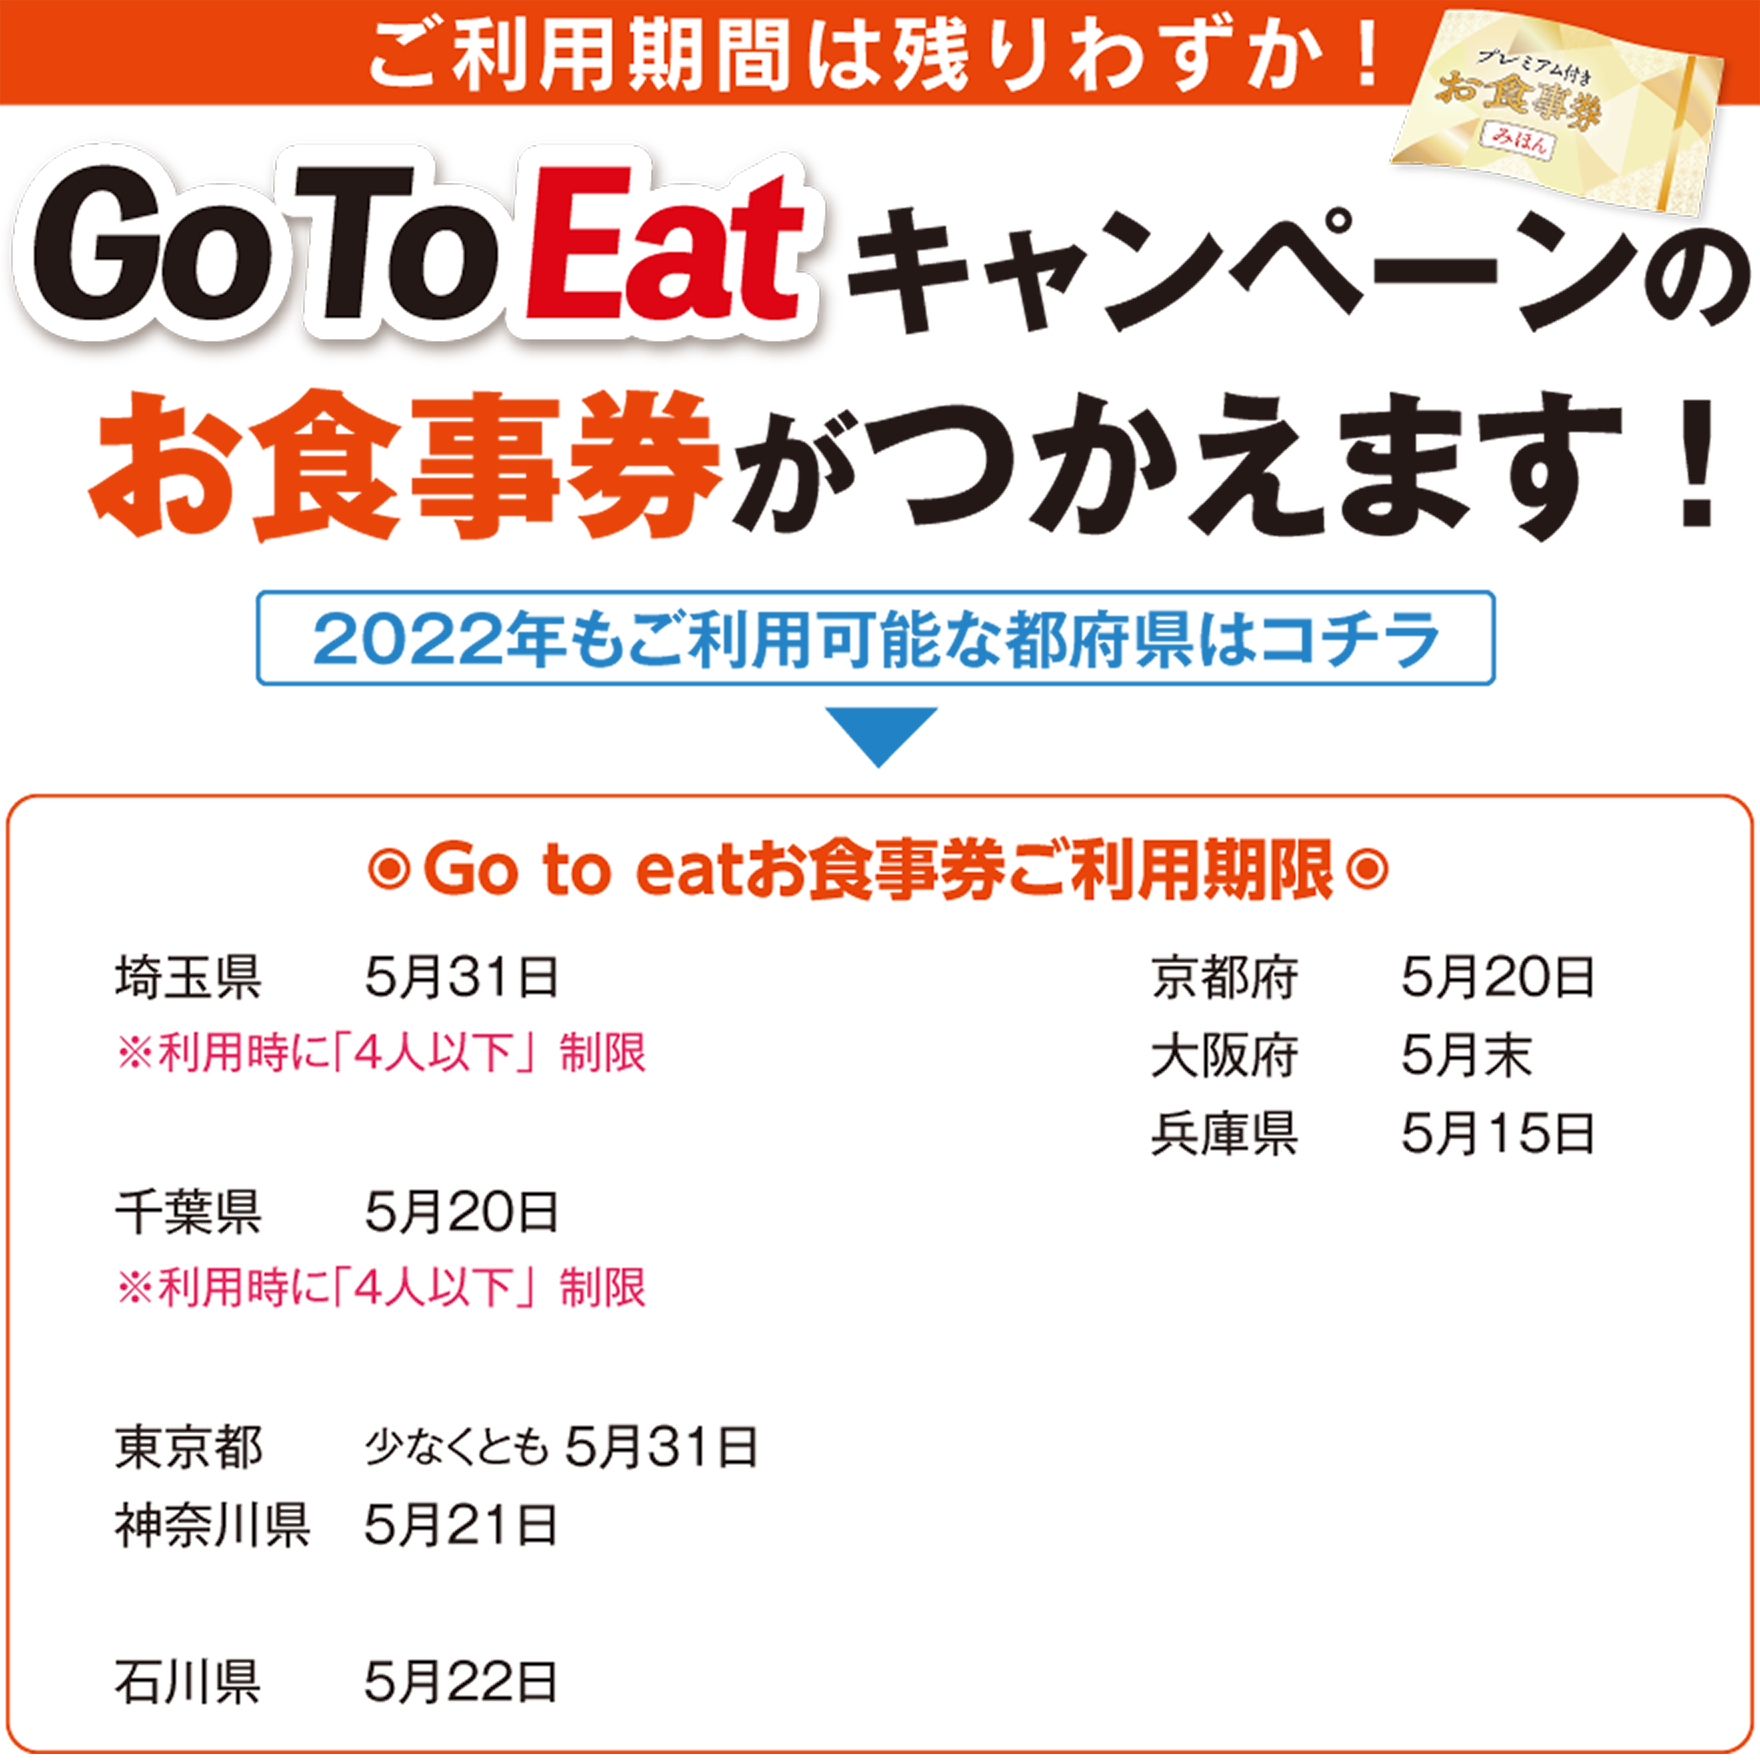 Go To Eat キャンペーンのお食事券が使えます！